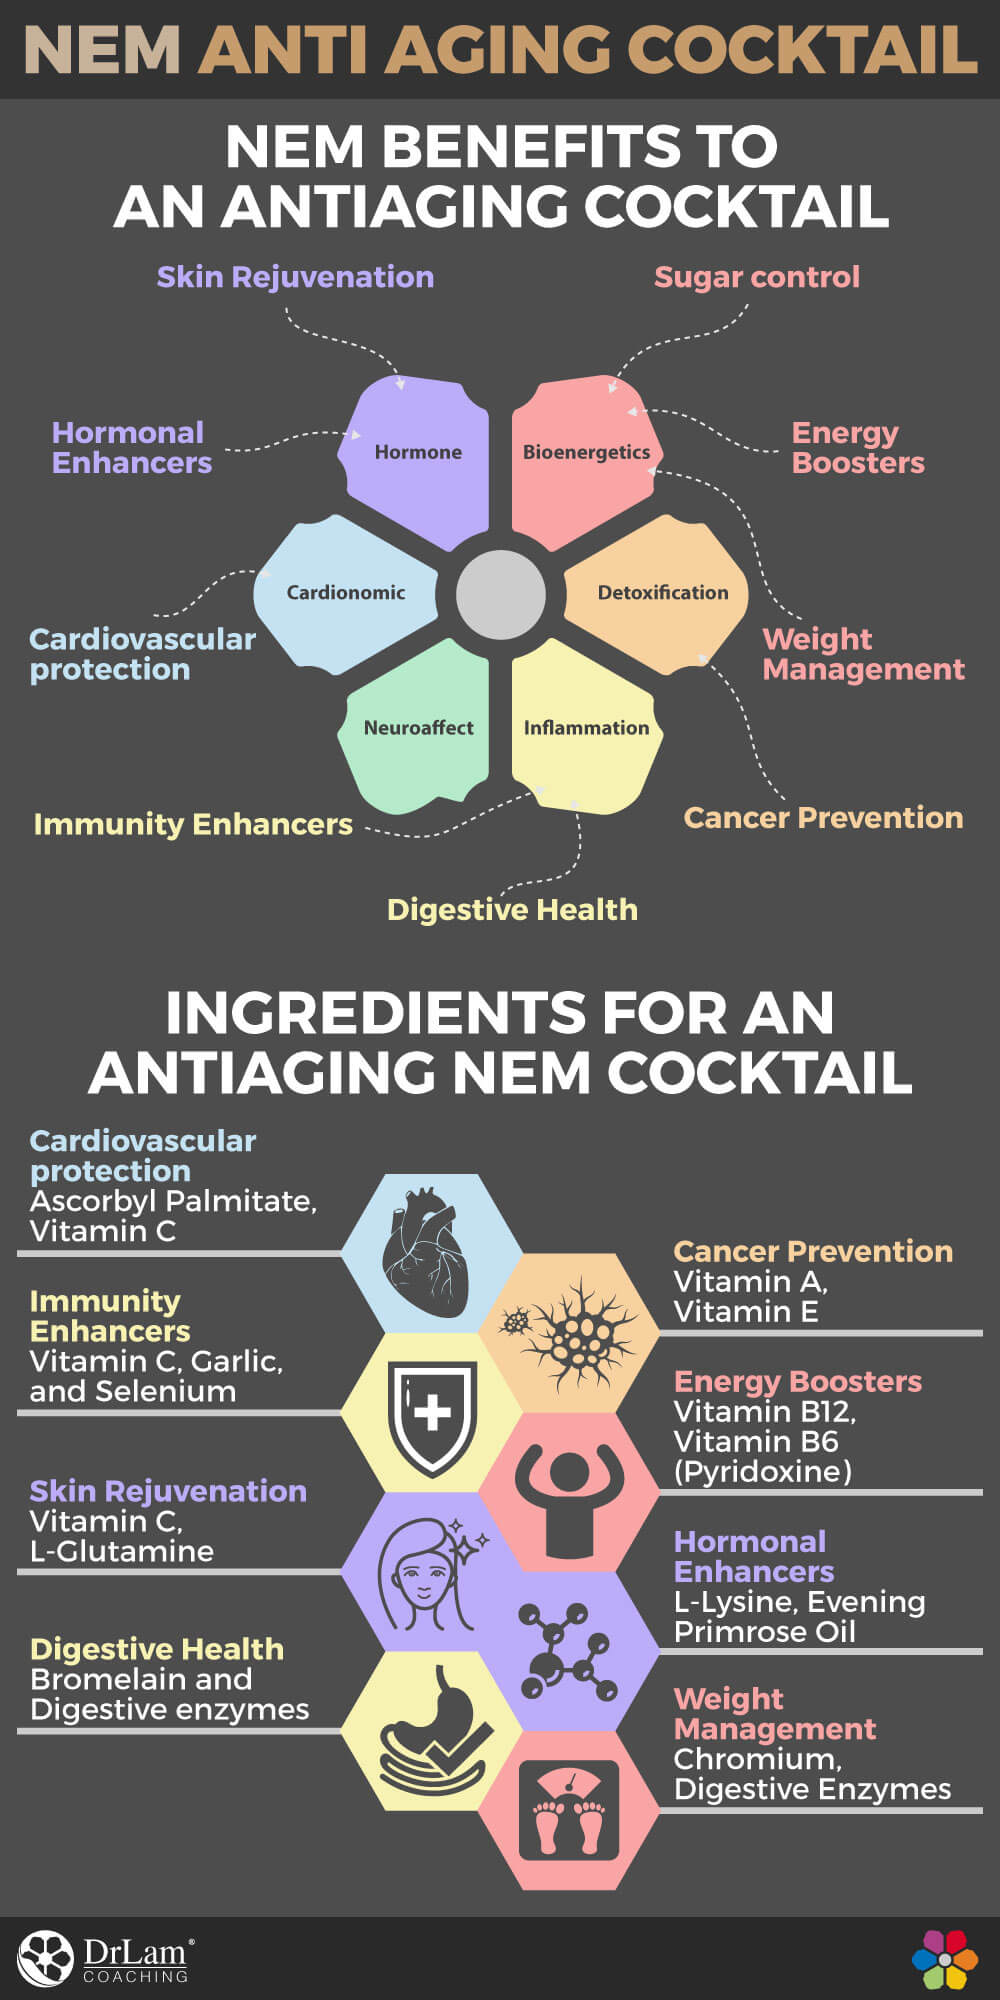 NEM Anti-aging Cocktails